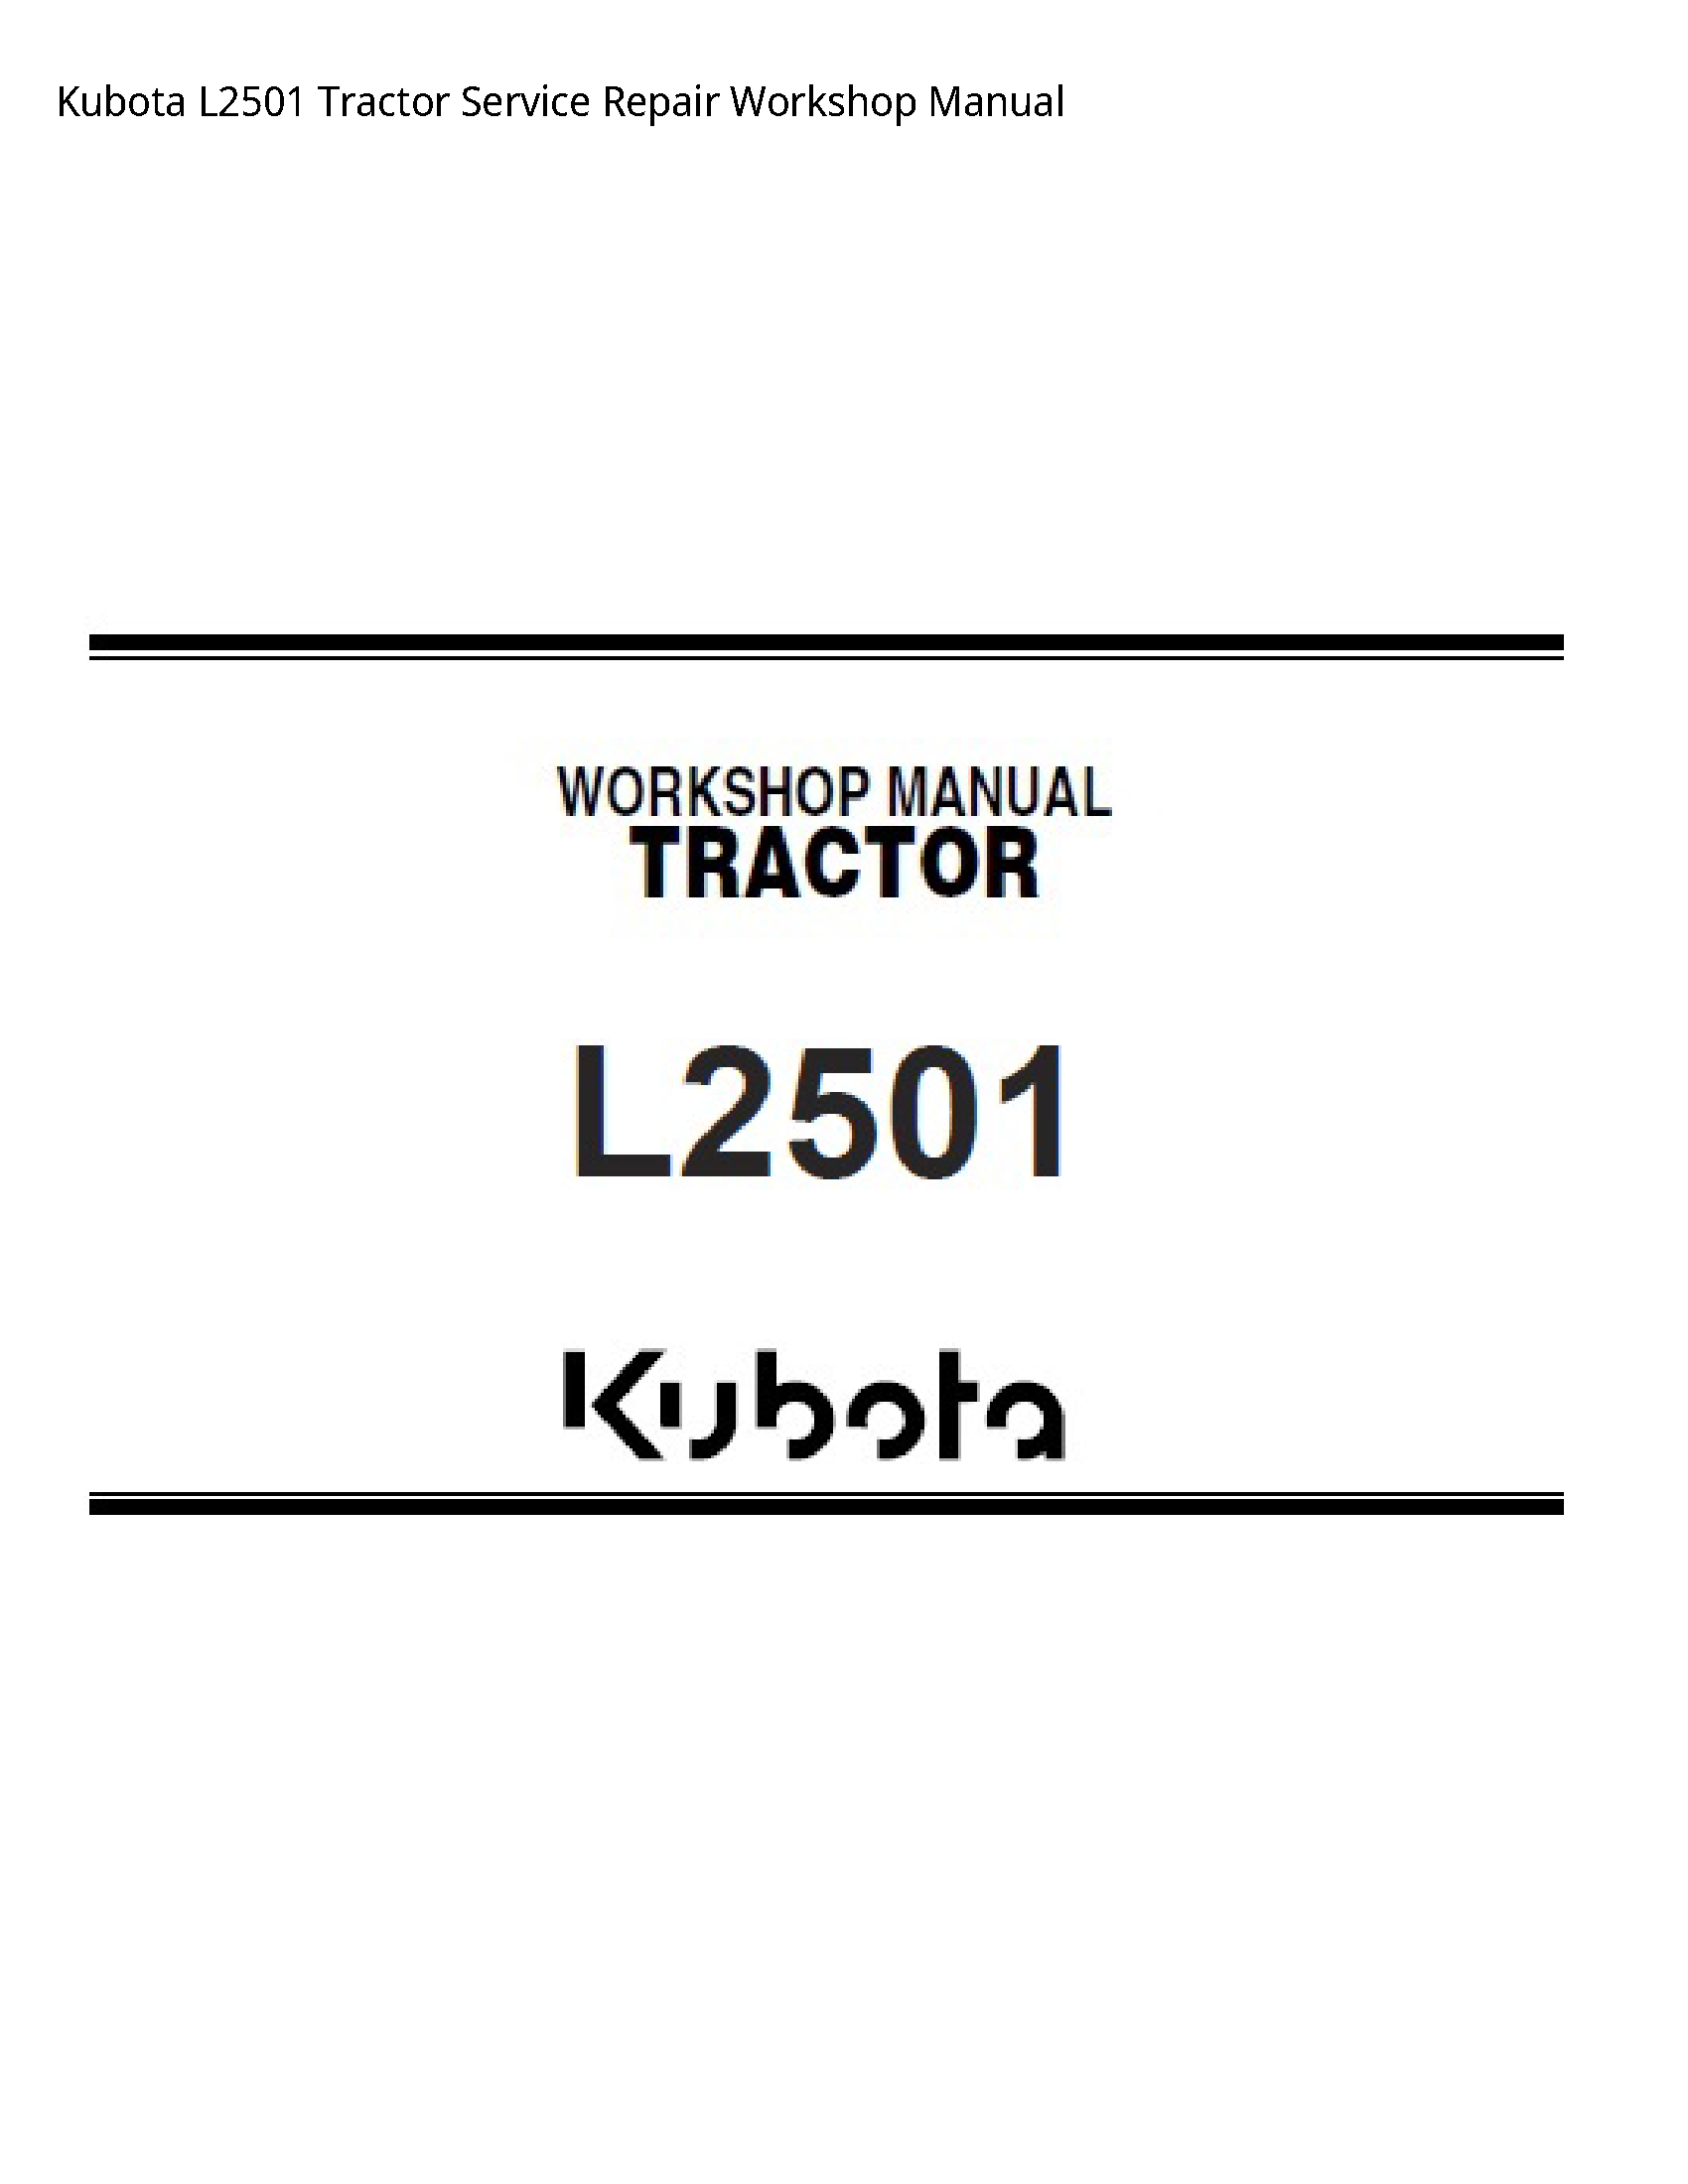 Kubota L2501 Tractor manual